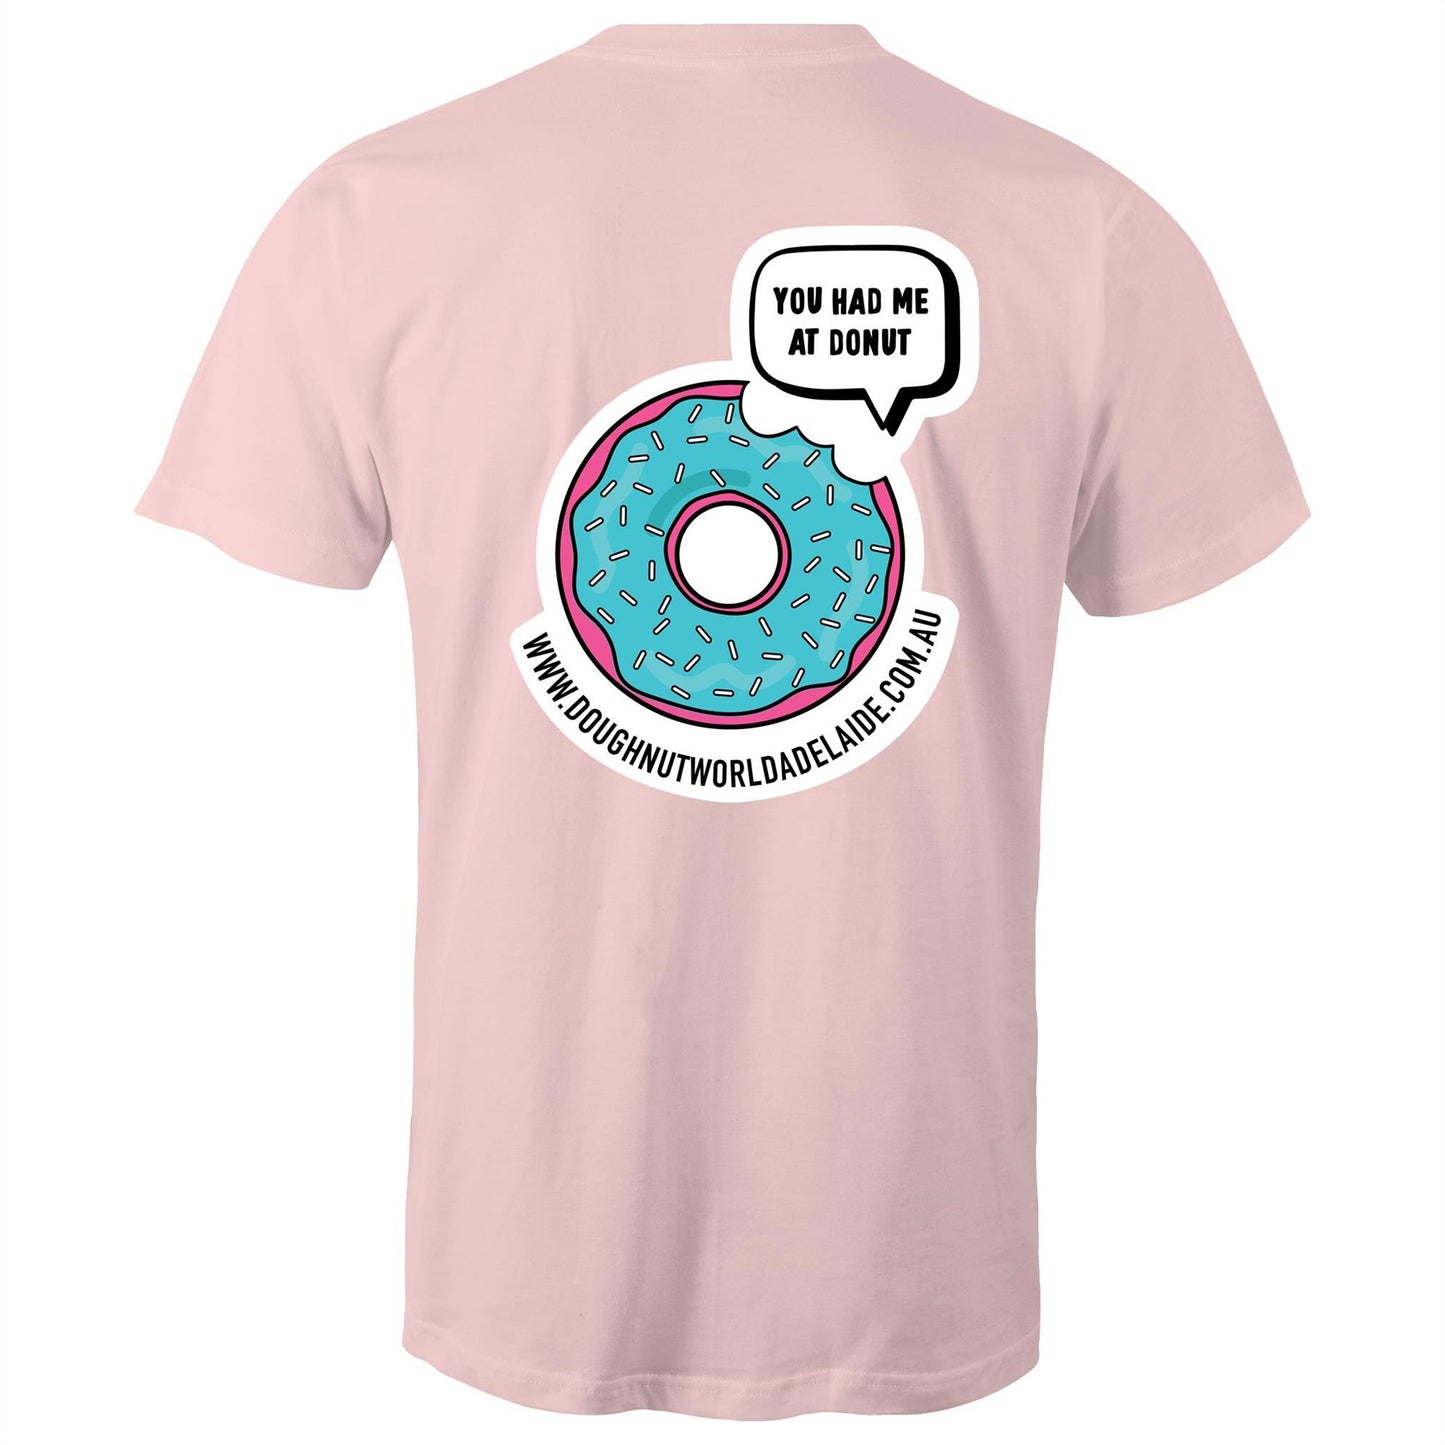 Doughnut World Logo front and back - Mens T-Shirt